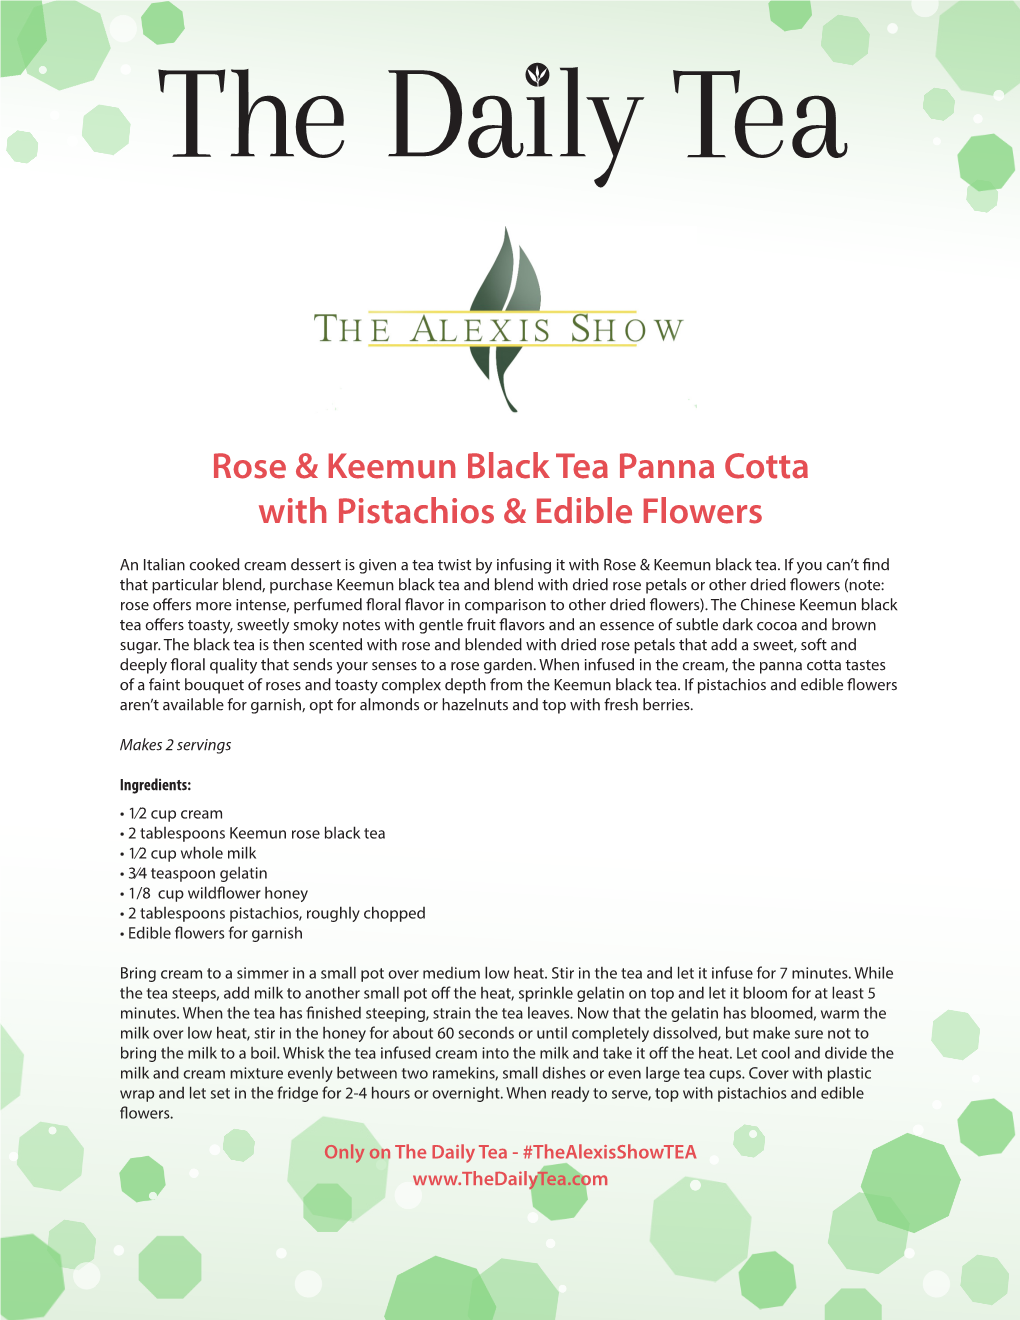 Rose & Keemun Black Tea Panna Cotta with Pistachios & Edible Flowers